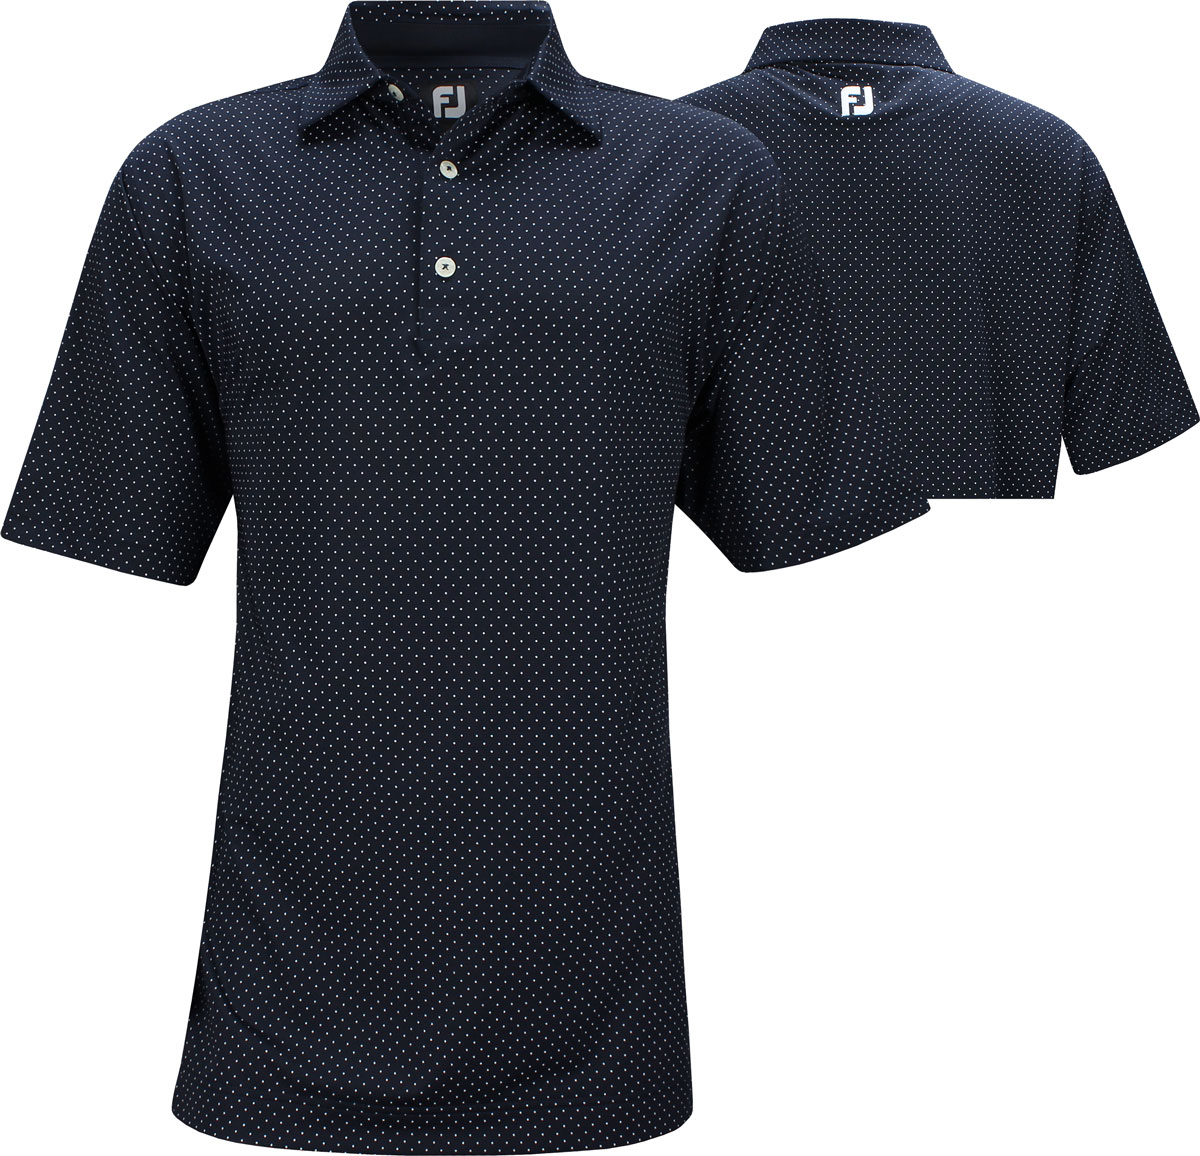 FootJoy ProDry Performance Stretch Lisle Dot Print Golf Shirts